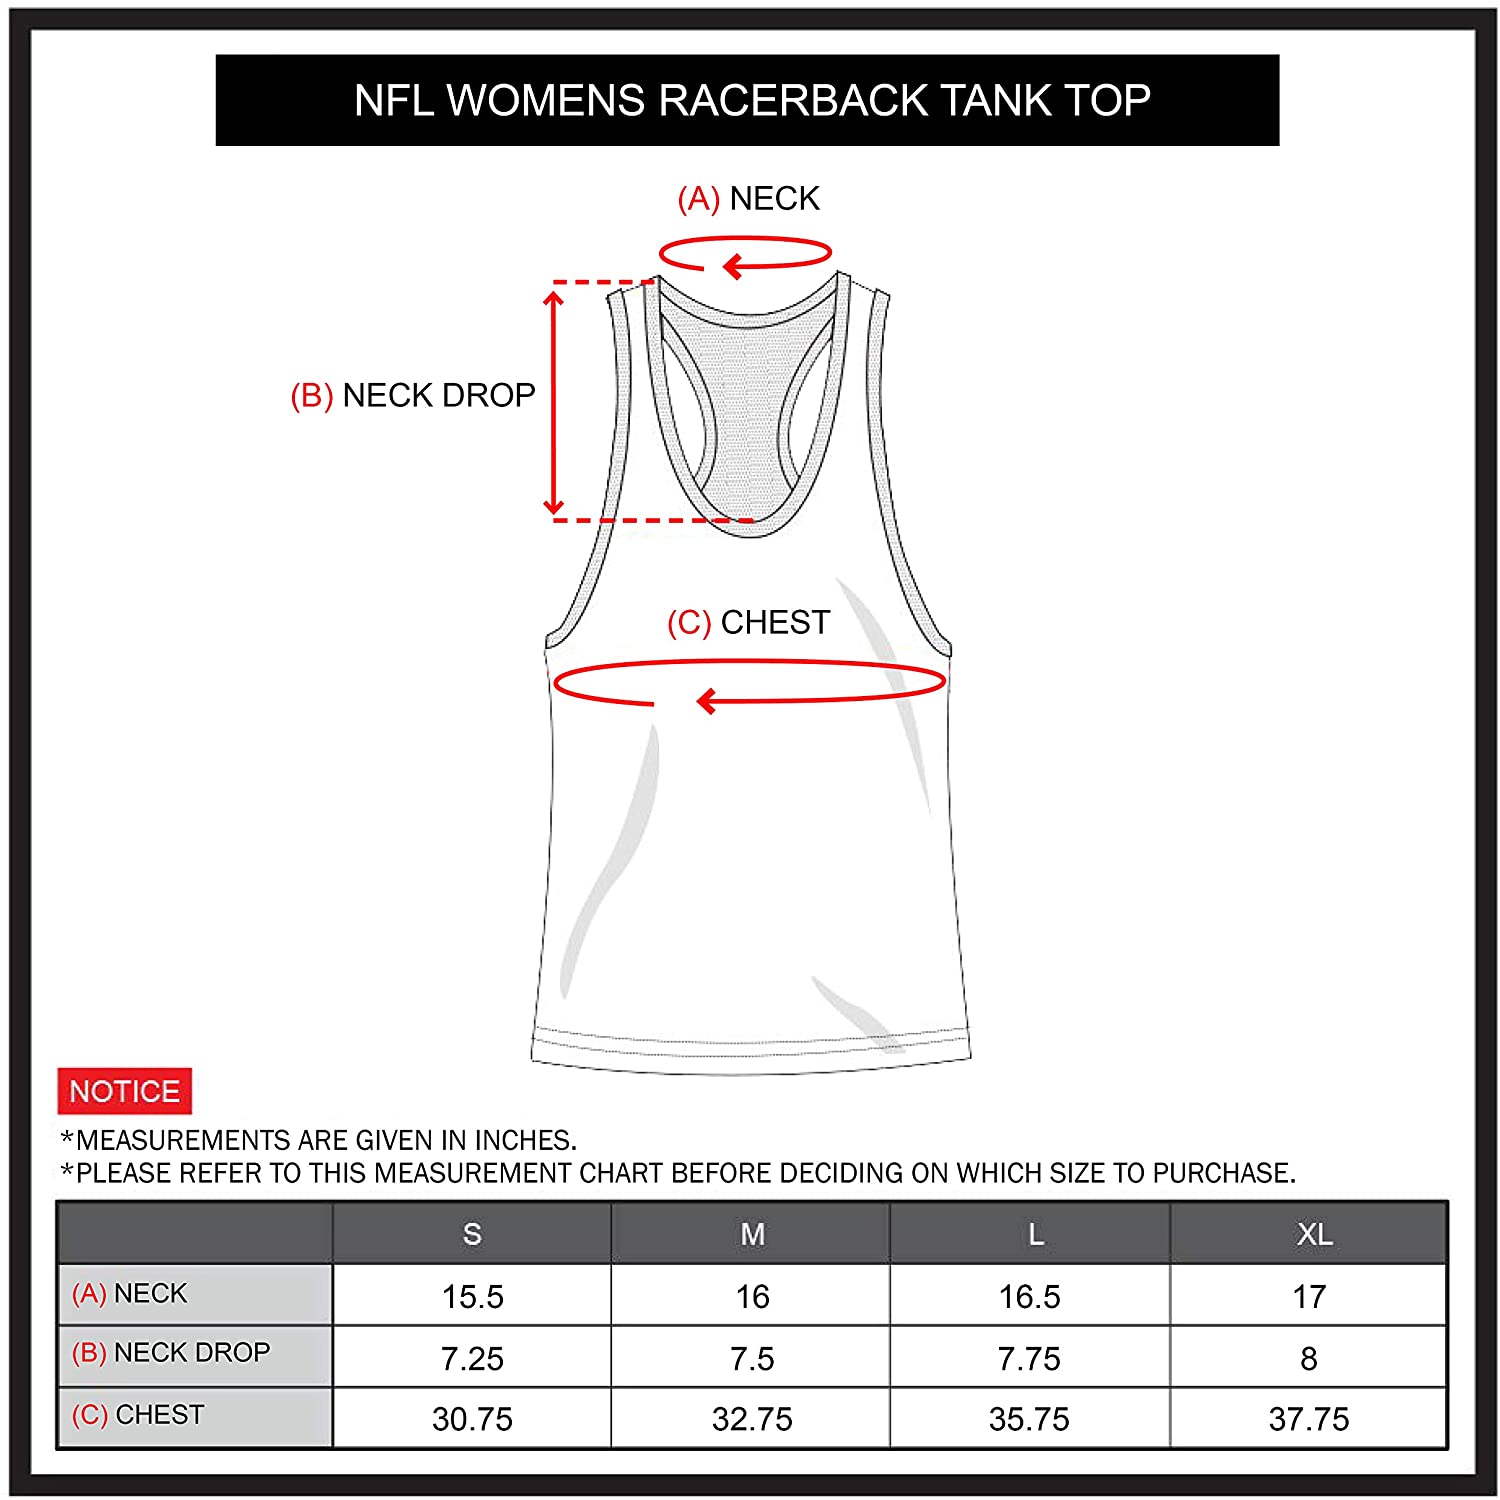 NFL New York Giants Women's Jersey Tank Top|New York Giants